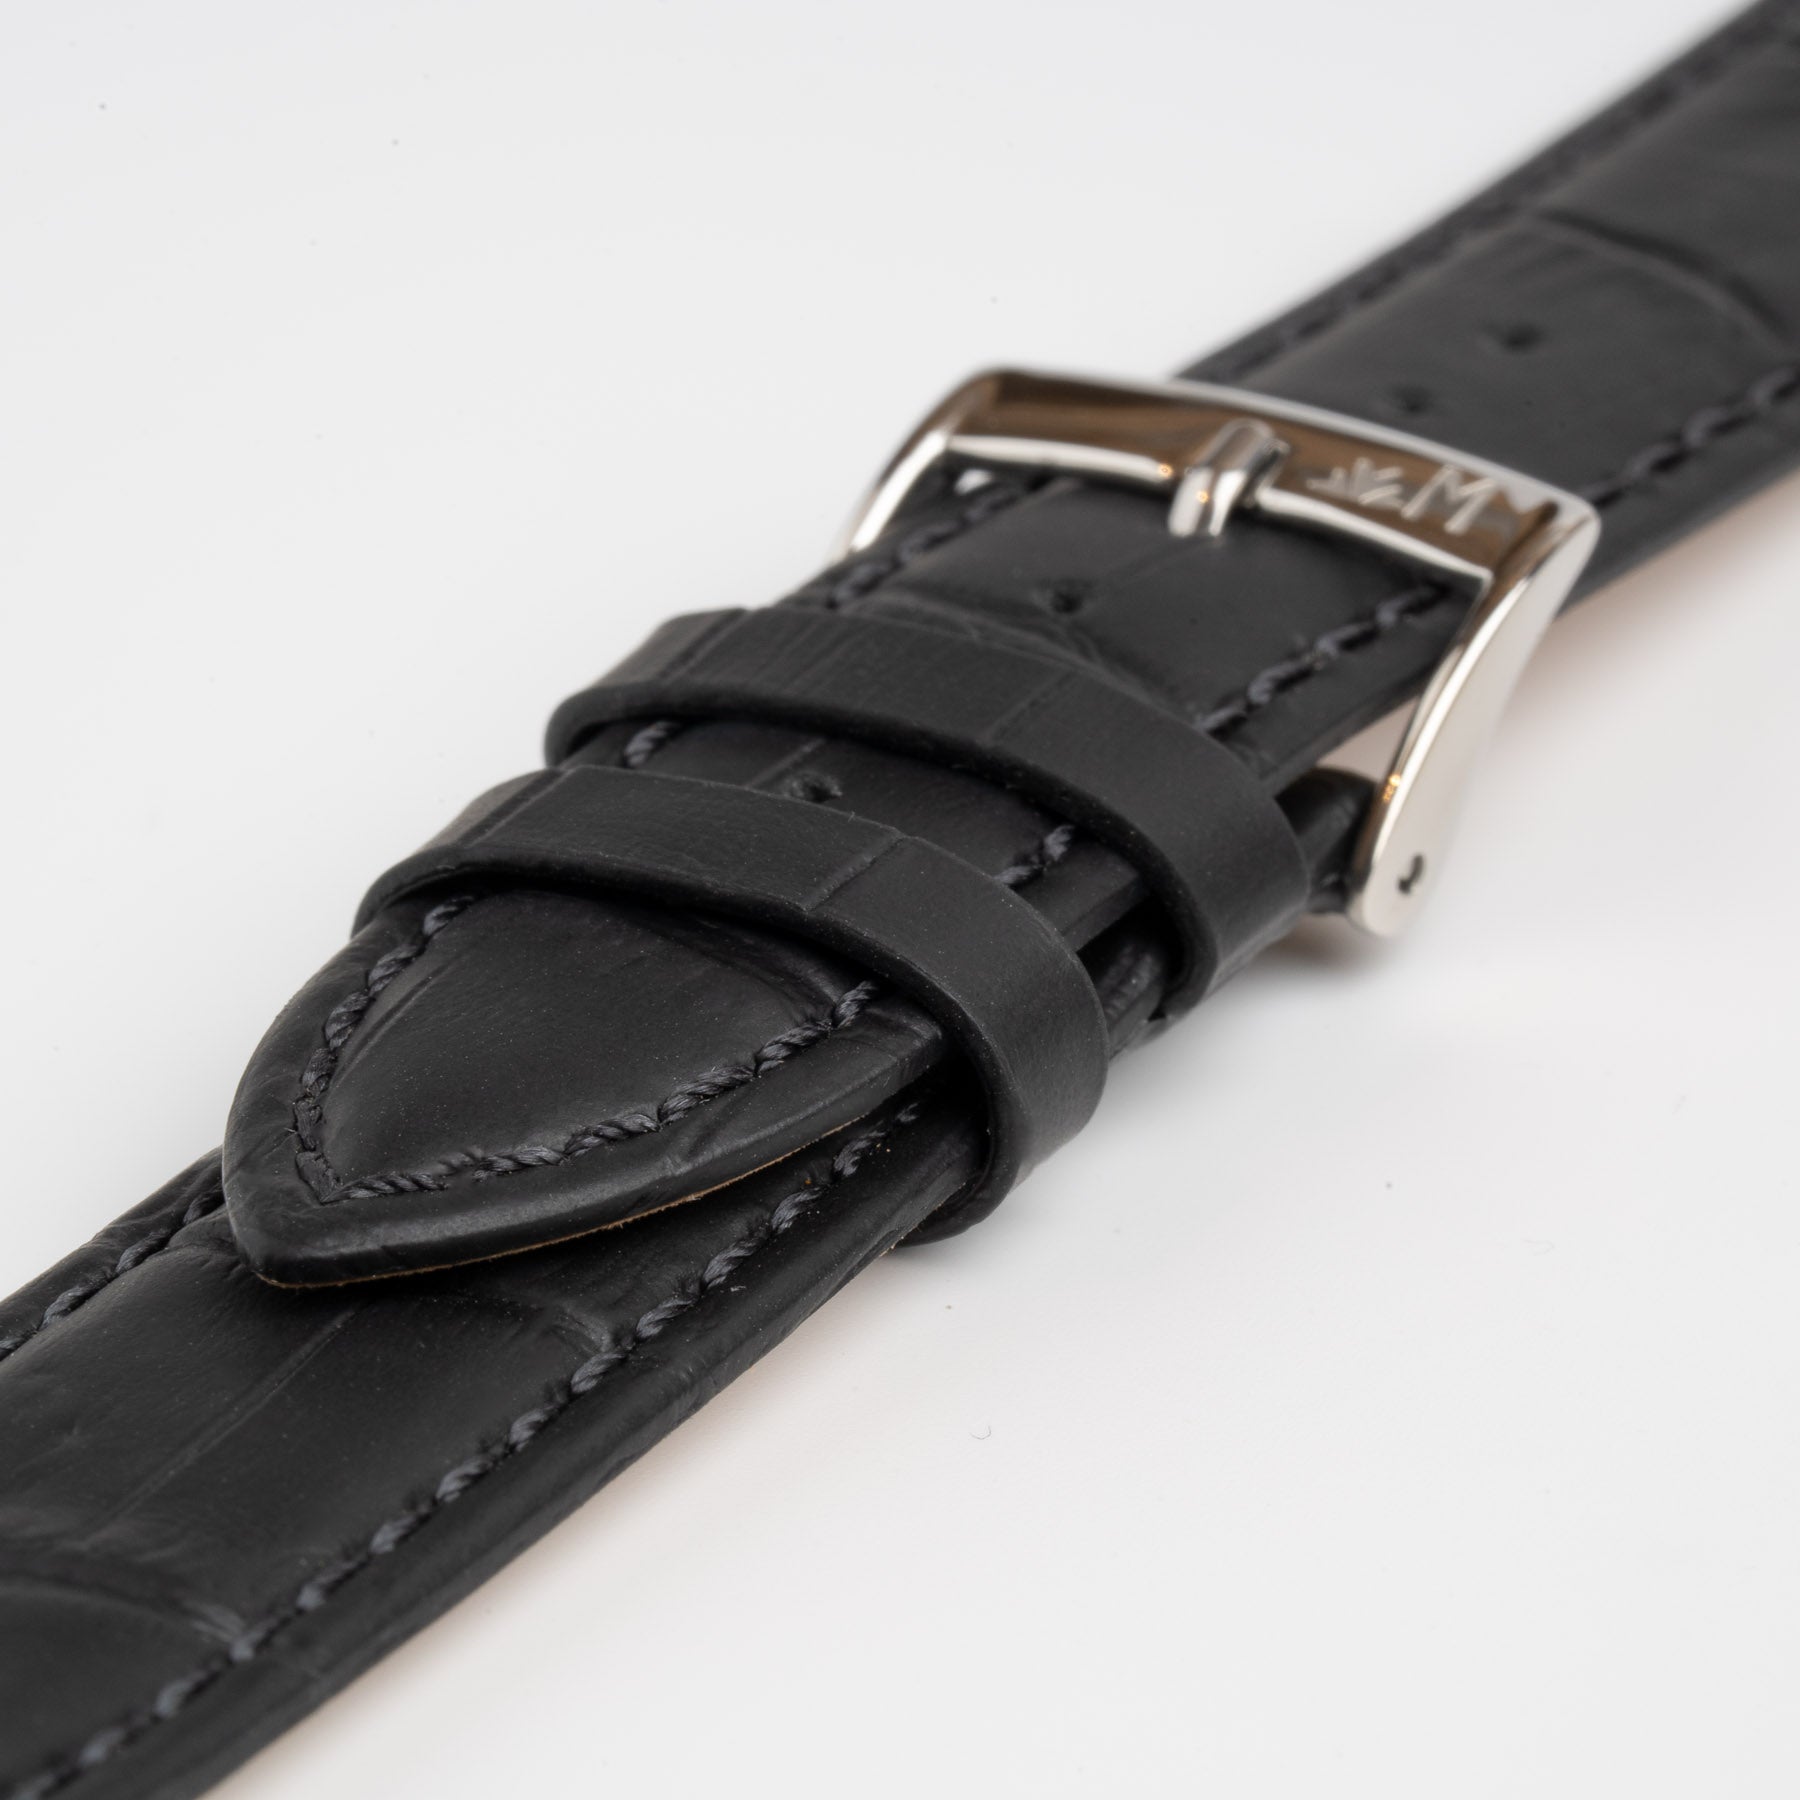 Bolle XL Black Watch Strap